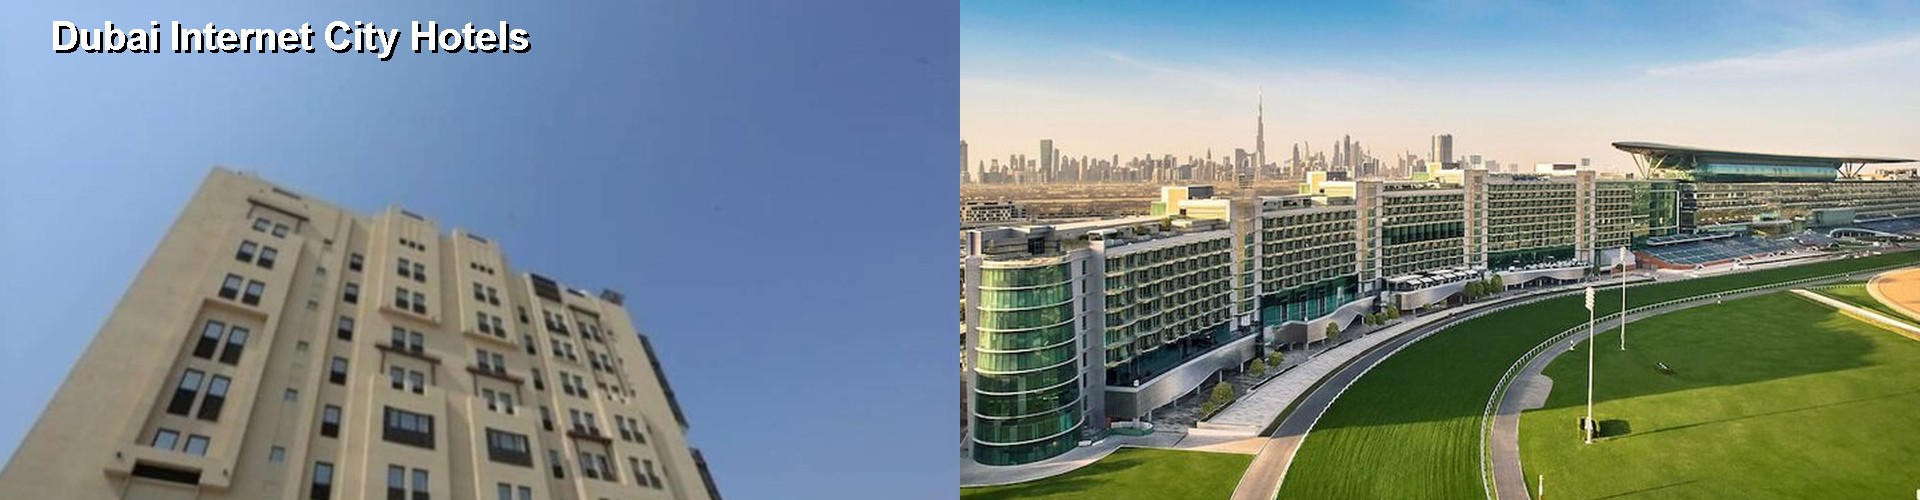 5 Best Hotels near Dubai Internet City